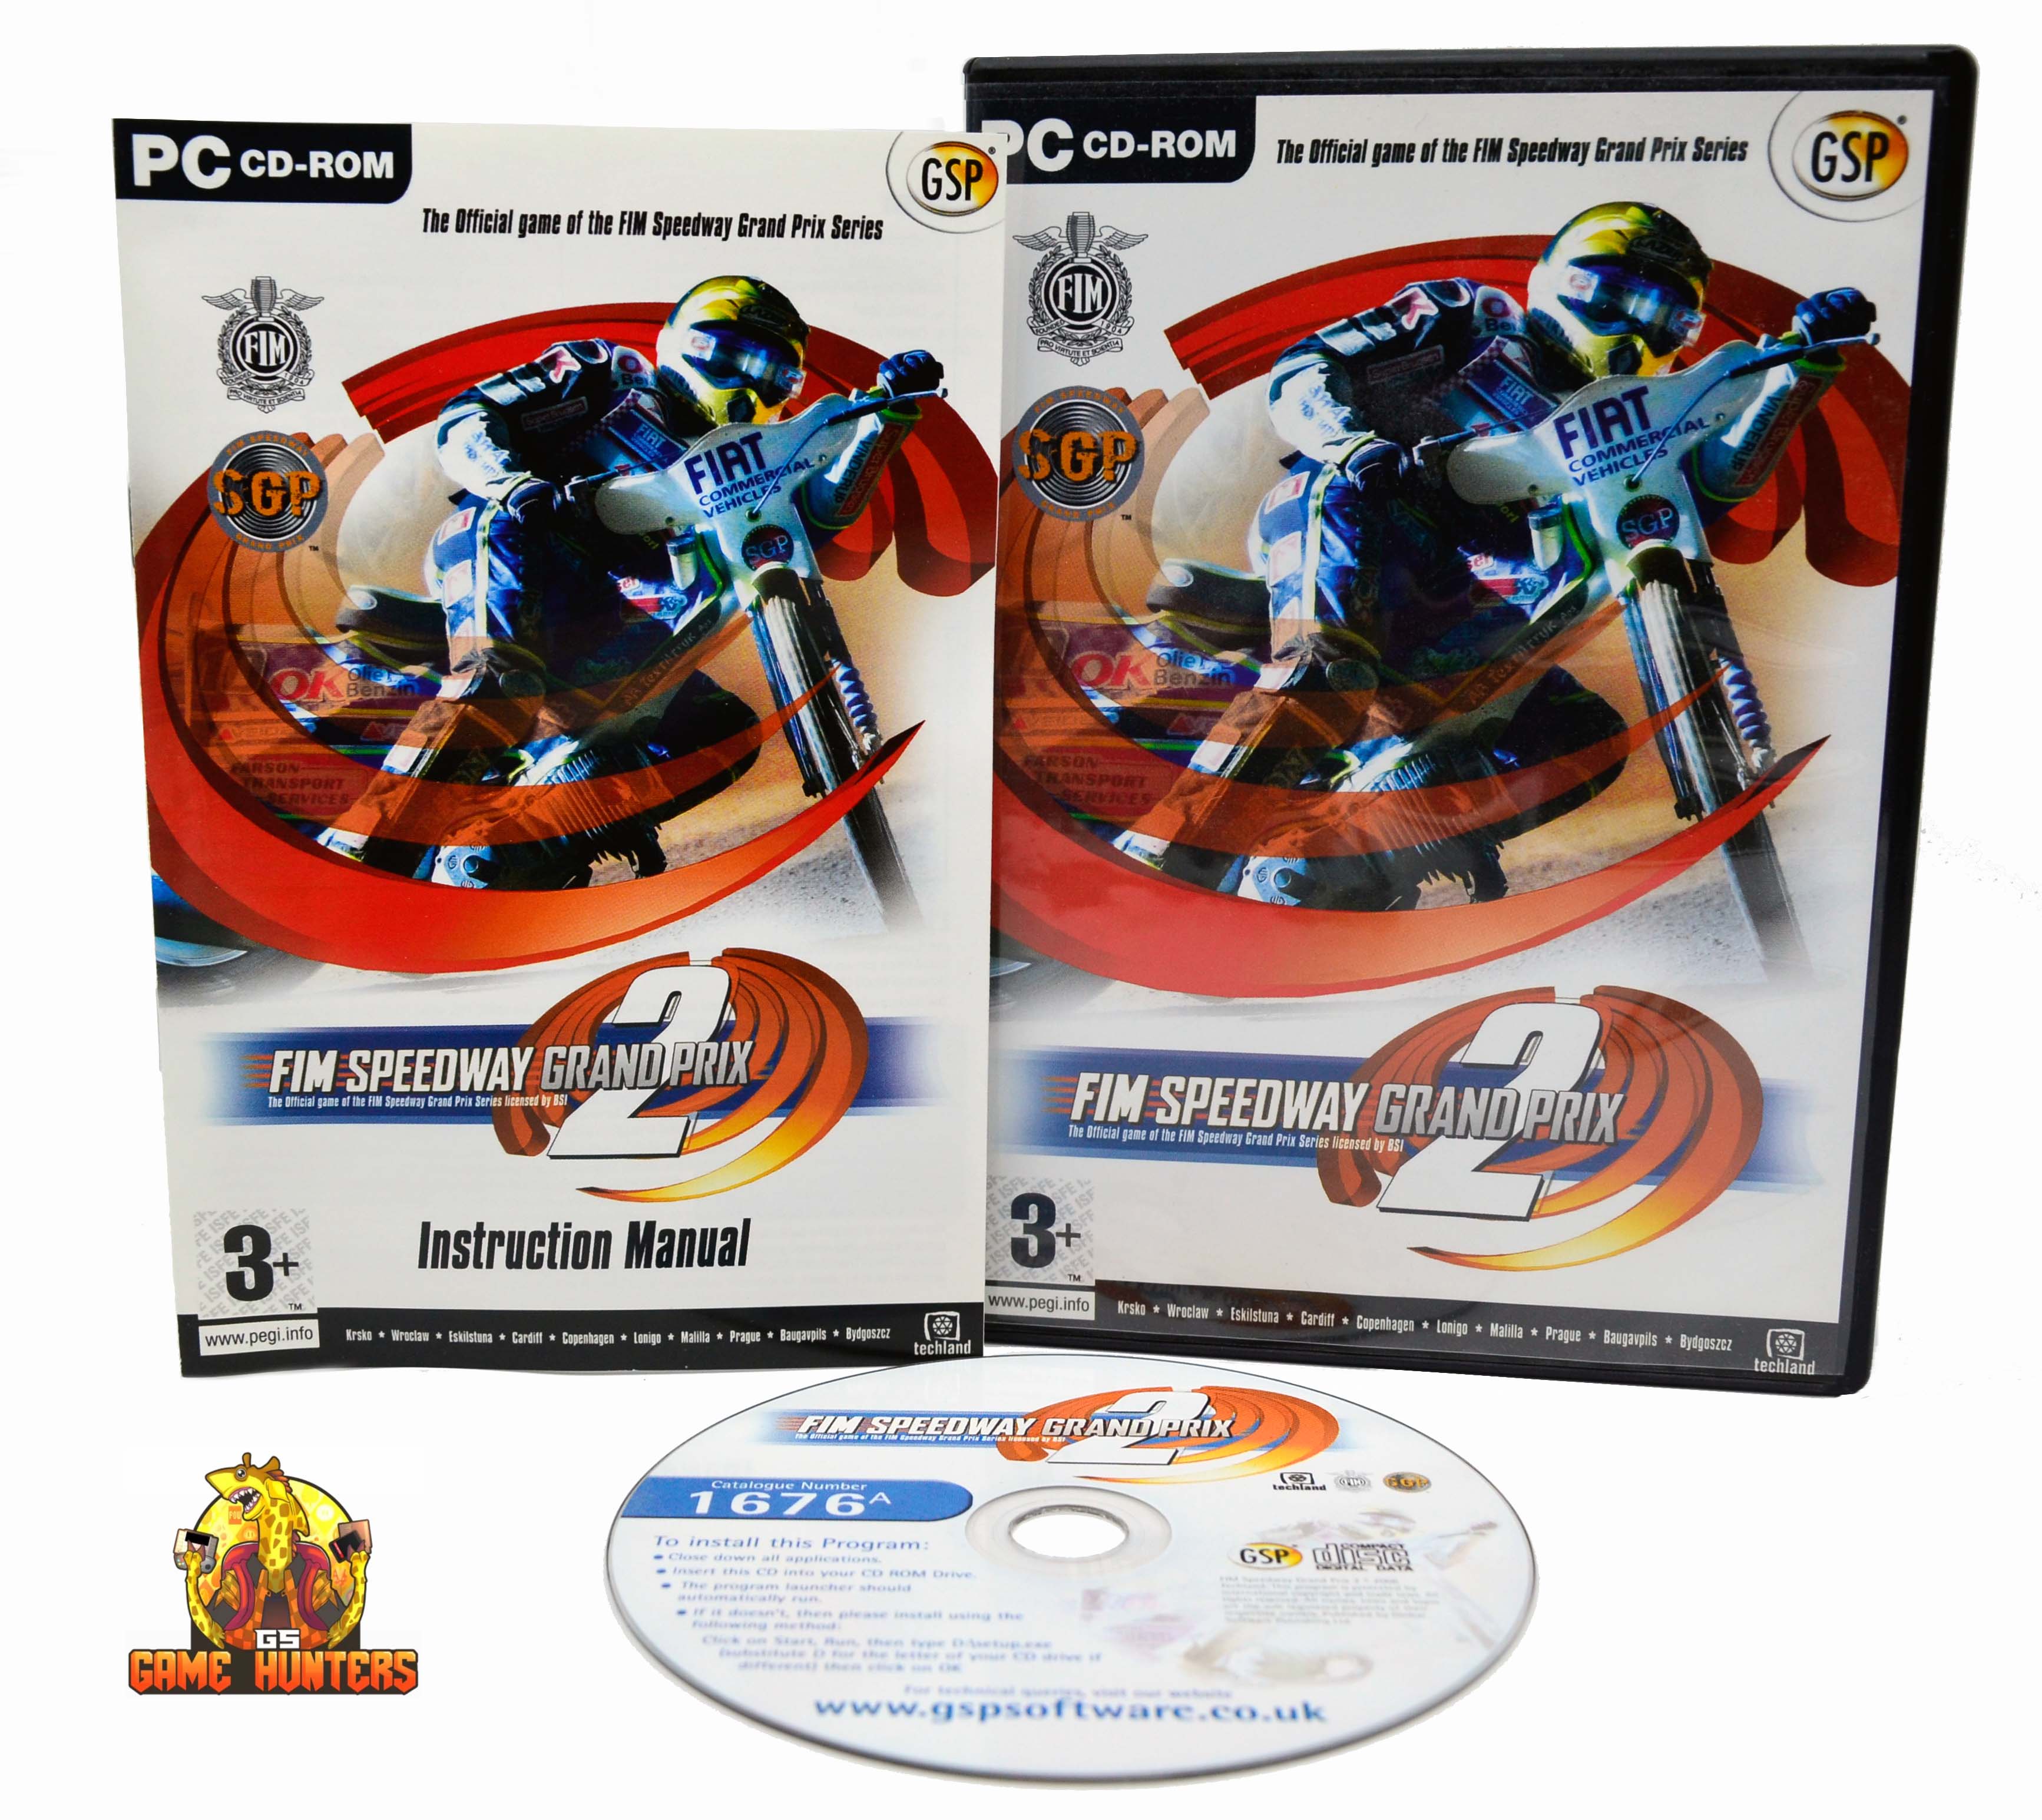 FIM Speedway Grand Prix 2 Case, Manual & Disc.jpg  by GSGAMEHUNTERS